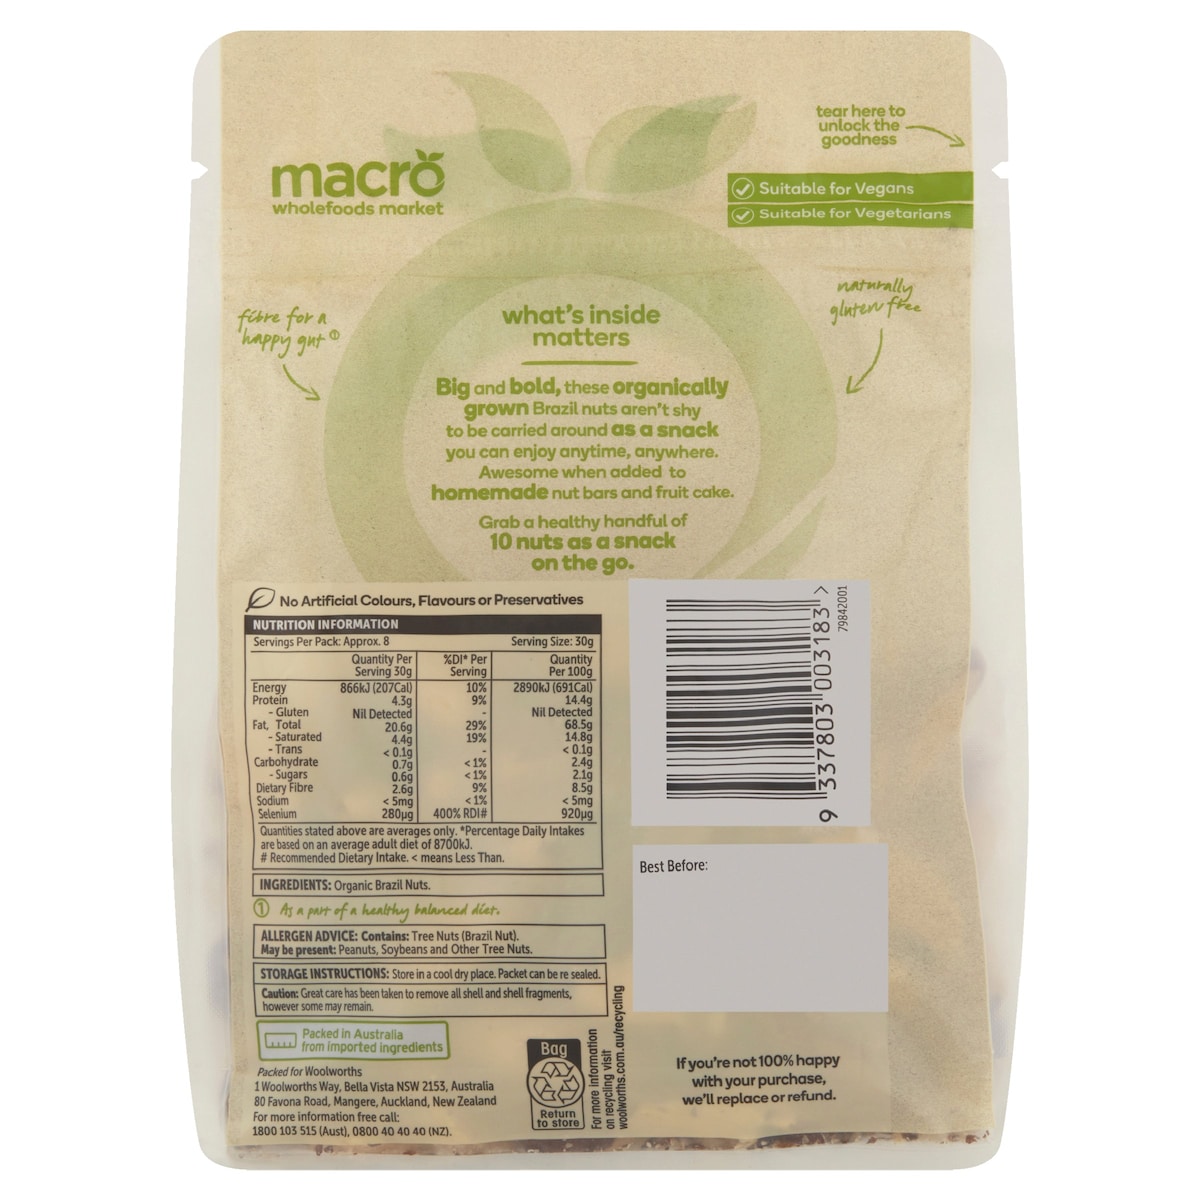 Macro Organic Natural Brazil nuts 250g